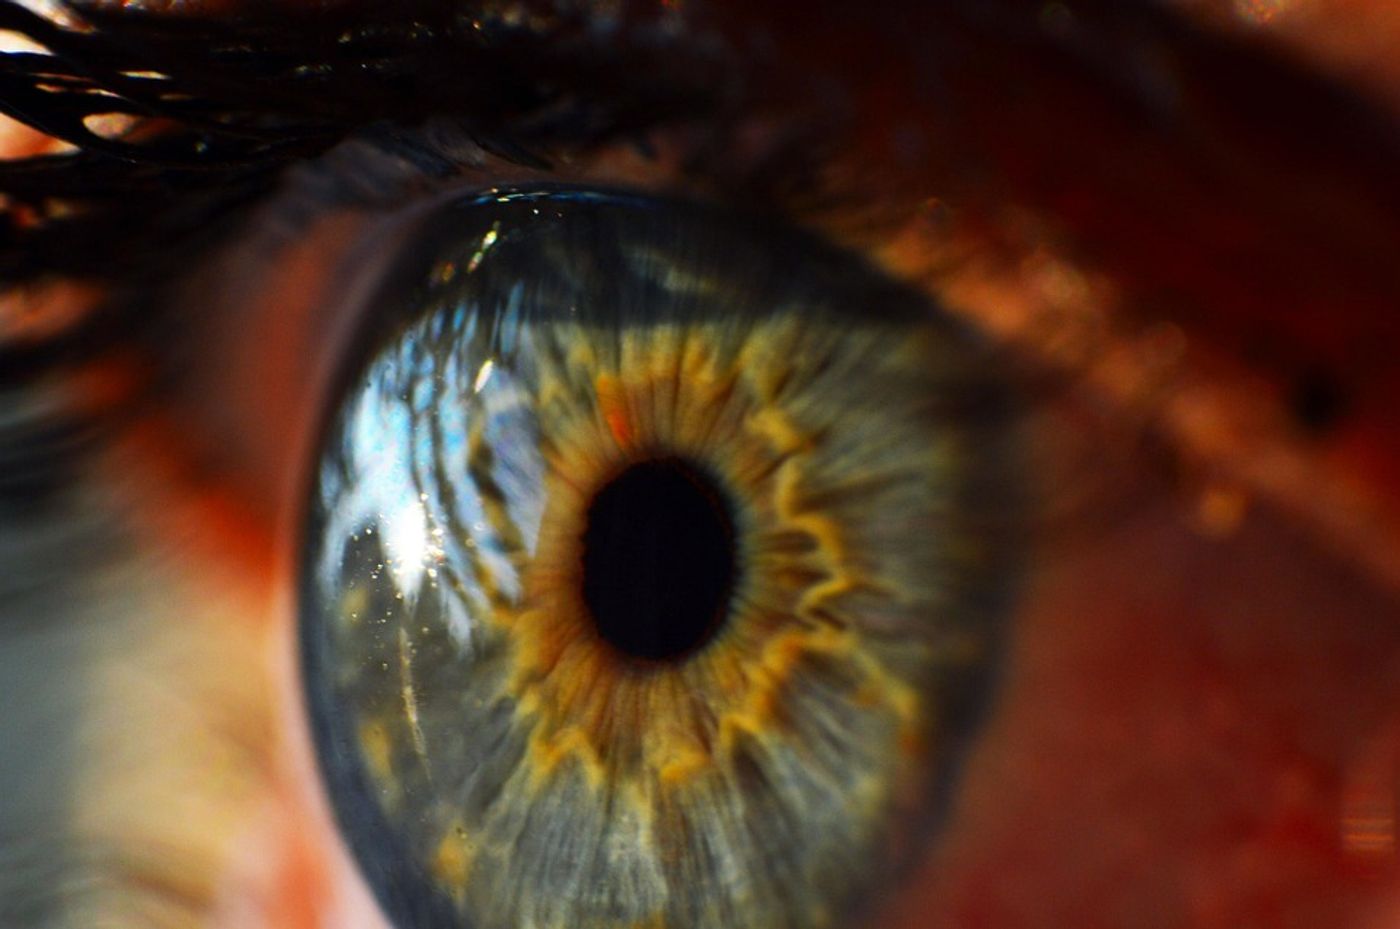 Retina exam may detect Parkinson's before symptoms appear | Image: pixabay.com